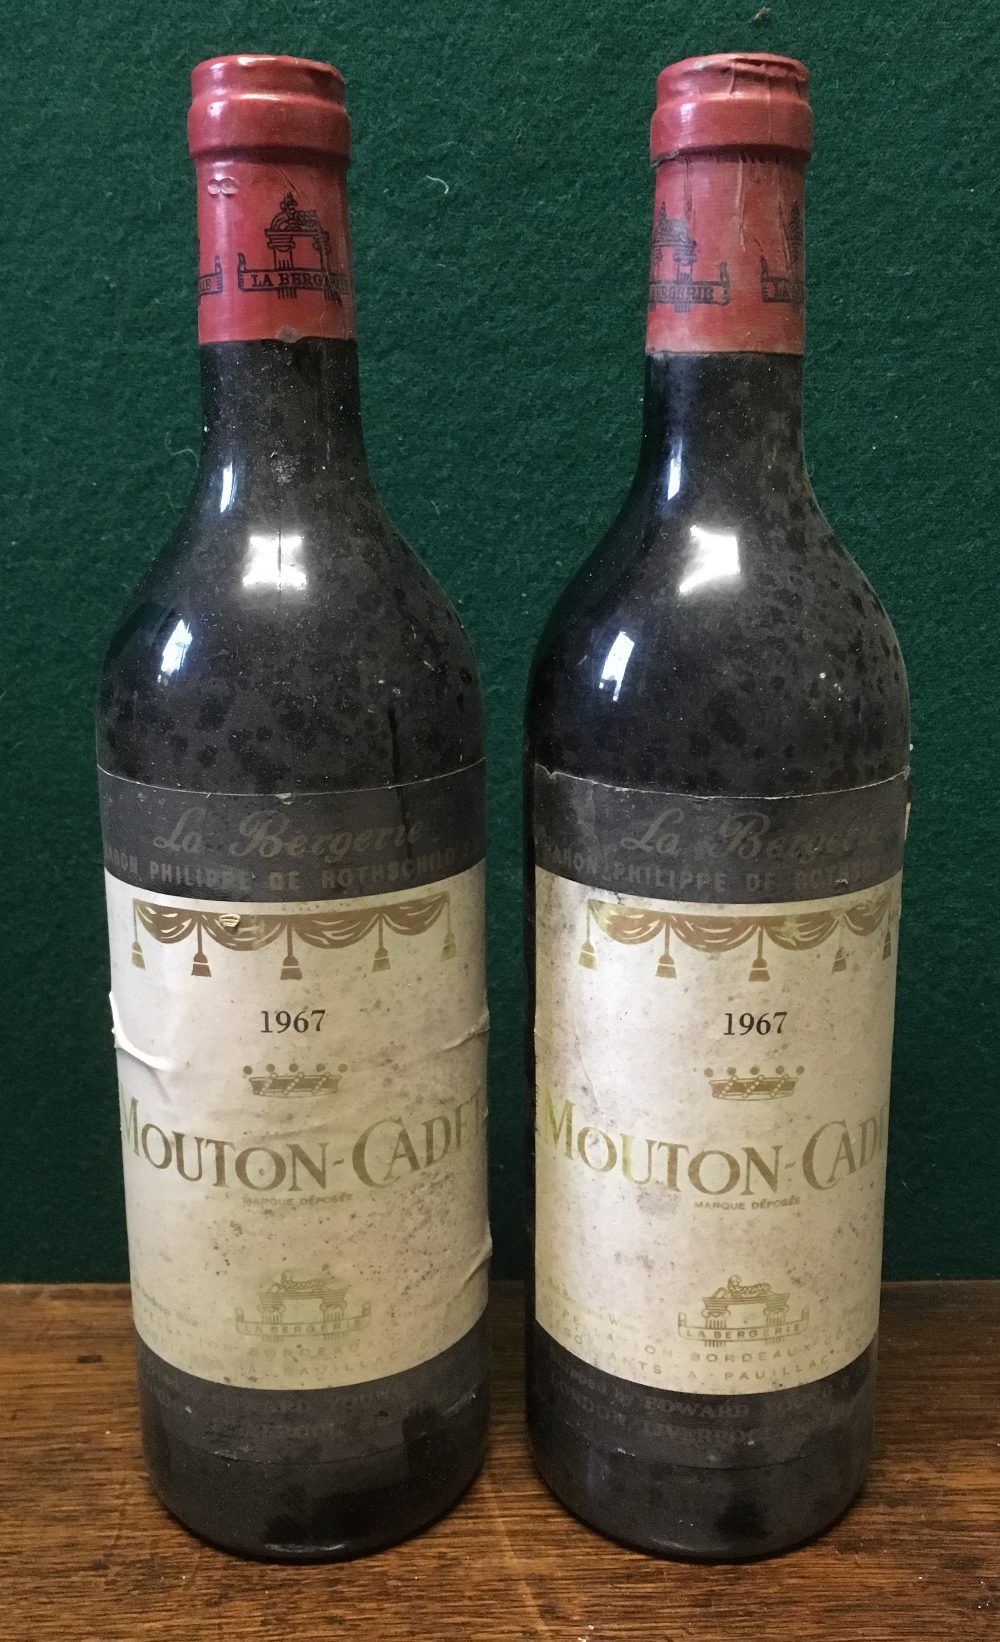 Baron Philippe de Rothschild Mouton-Cadet 1967 Two bottles.